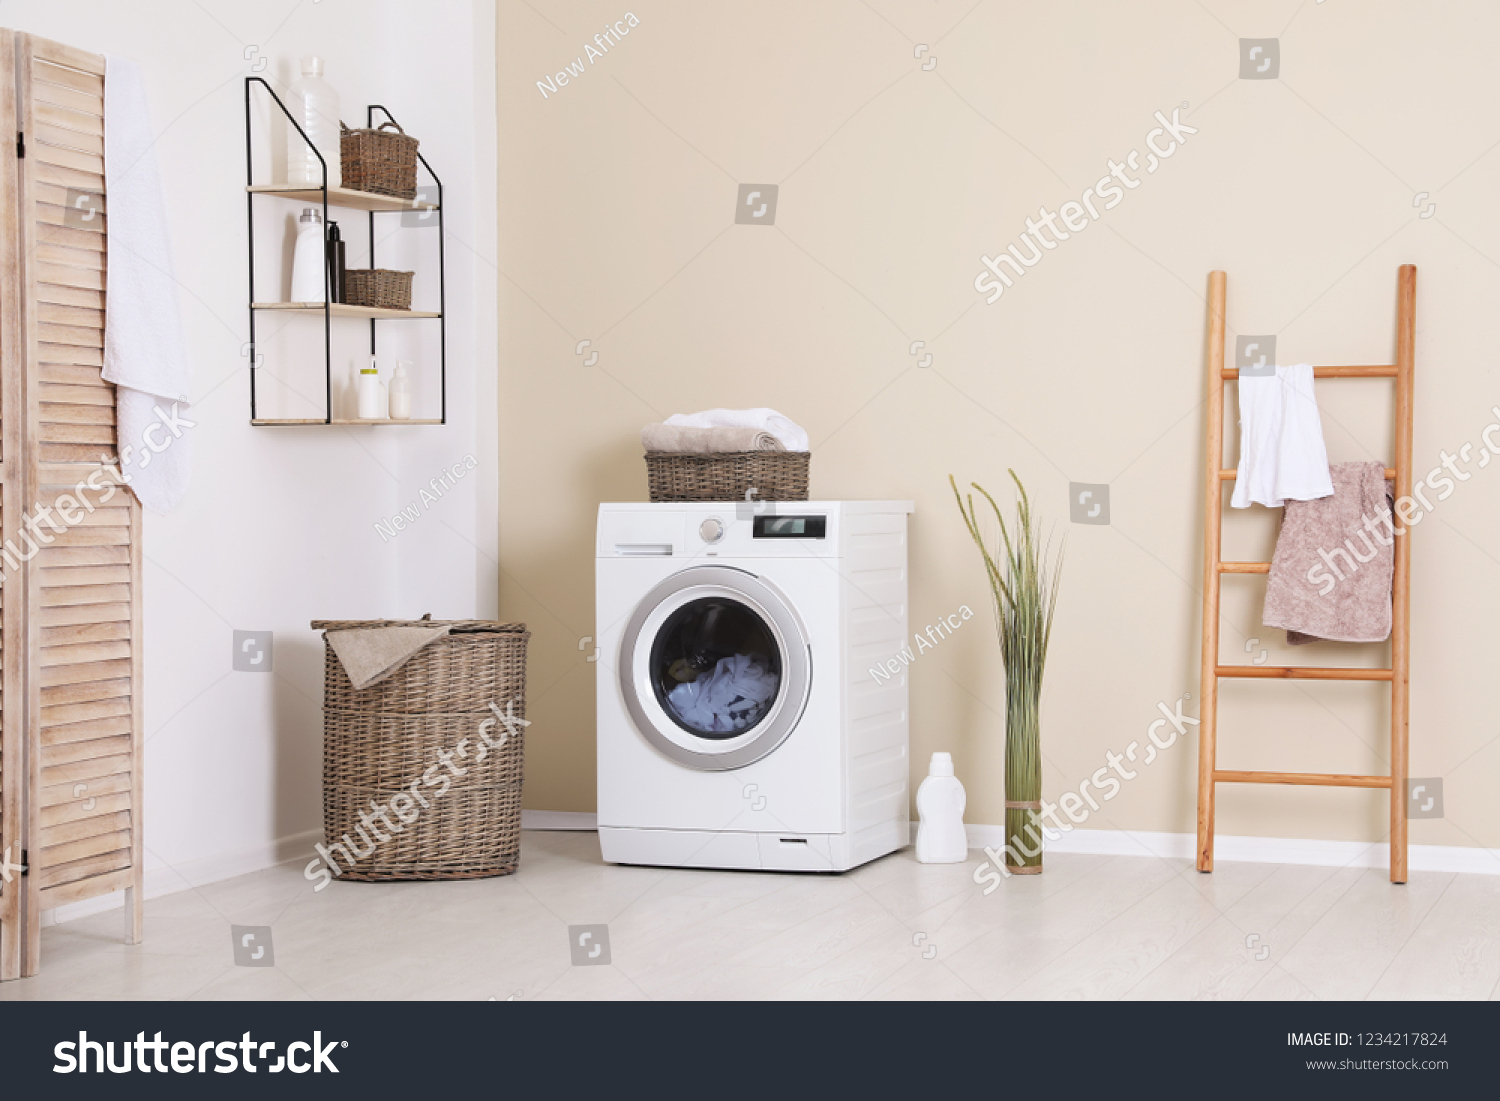 Laundry room interior with washing machine near wall #1234217824